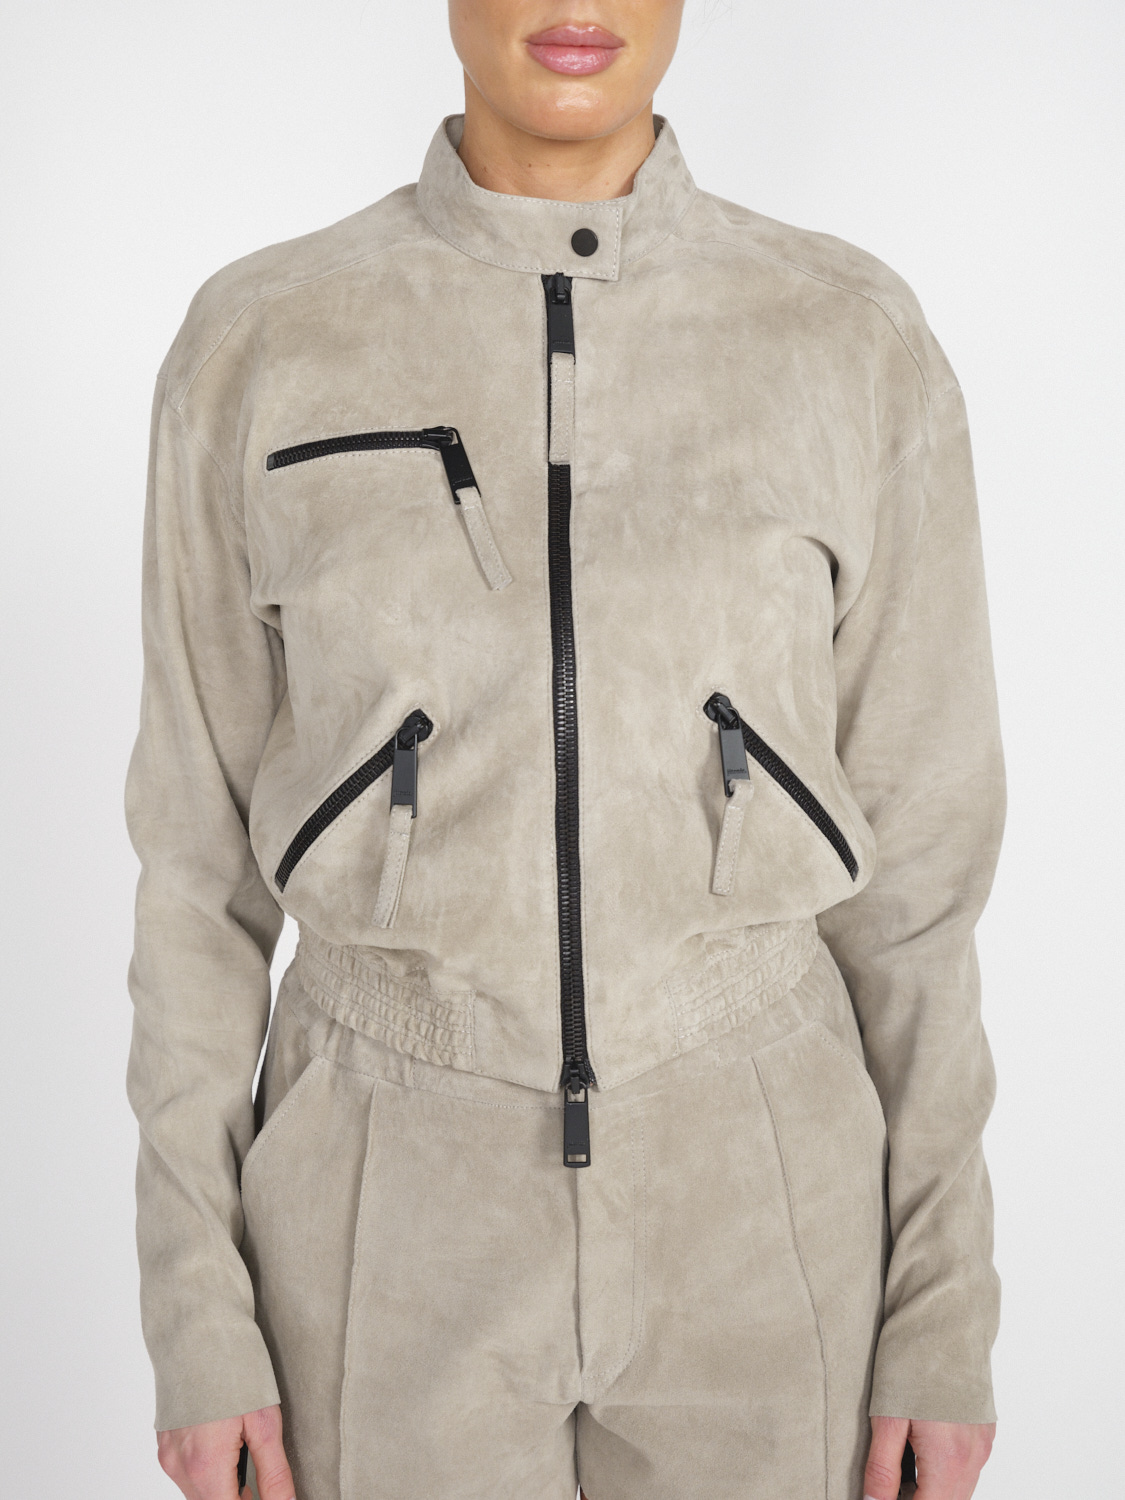 jitrois Blof – Stretchige Veloursleder-Jacke mit schwarzen Zippern  beige 36